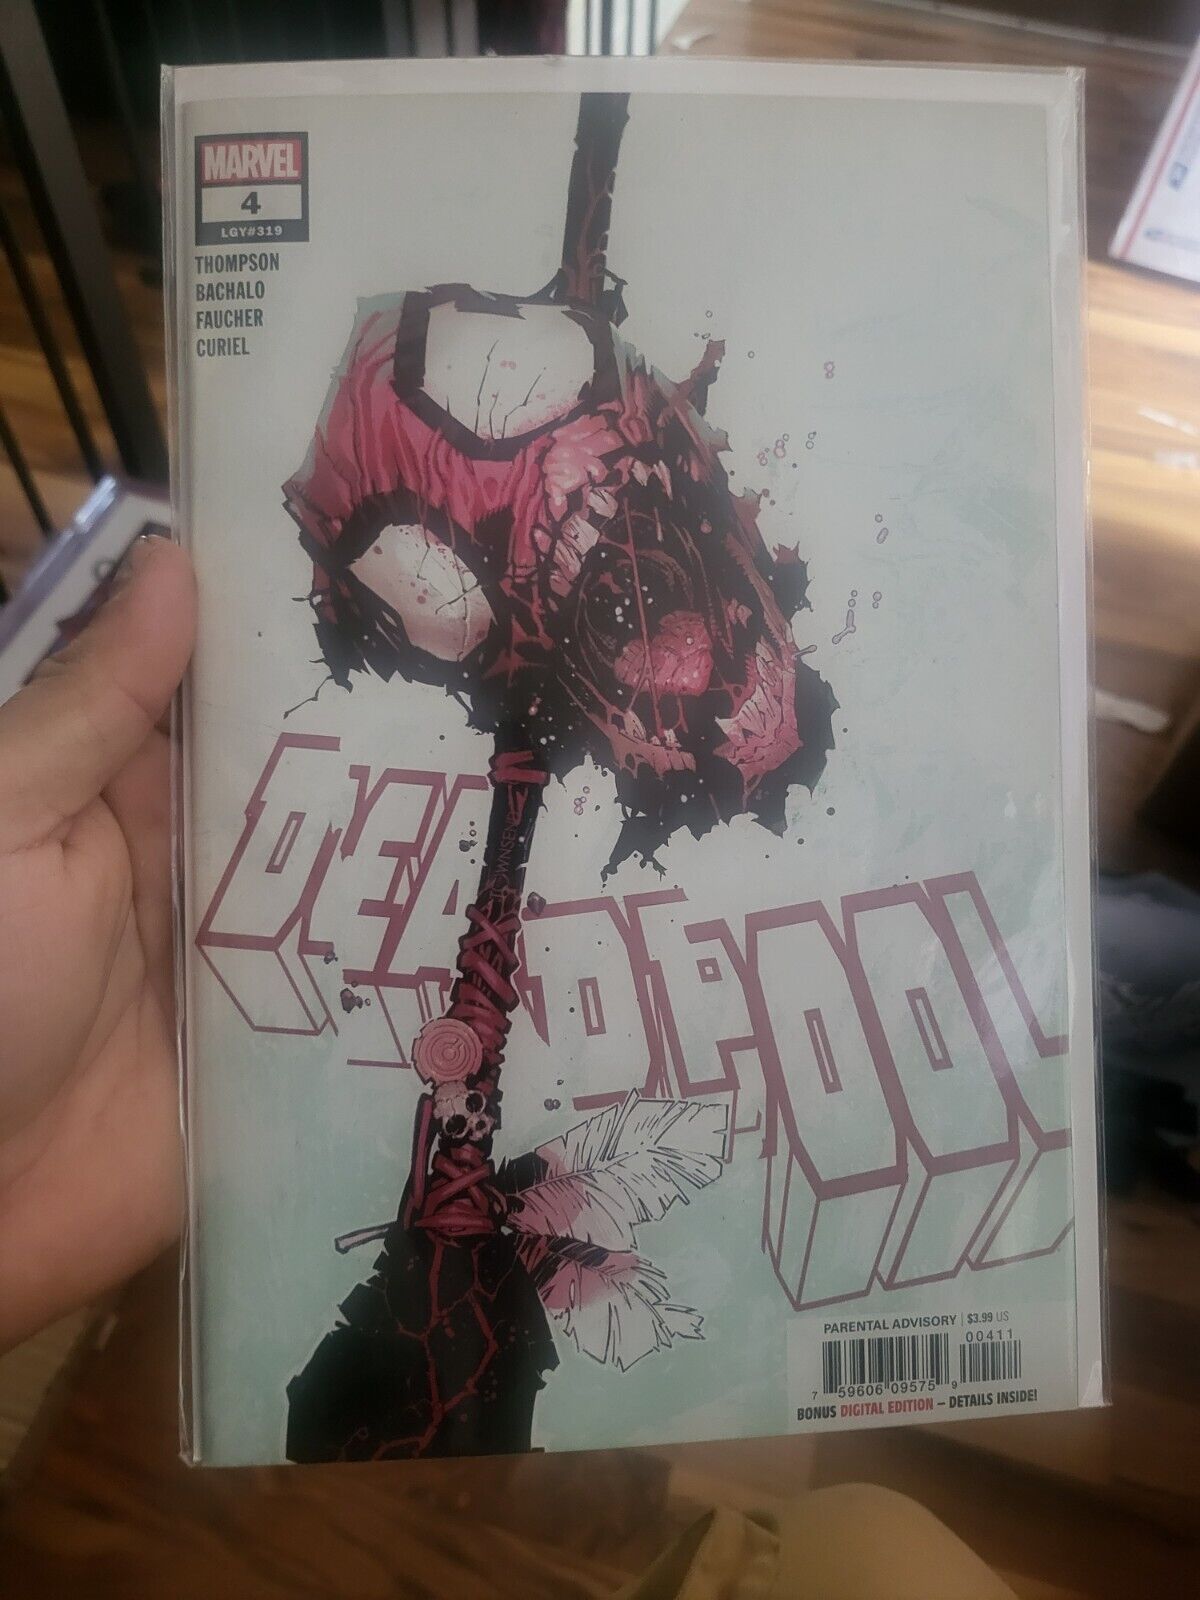 Deadpool #4 LGY #319 Deadpool vs. Kraven 2020 Thompson Bachalo Marvel -NM